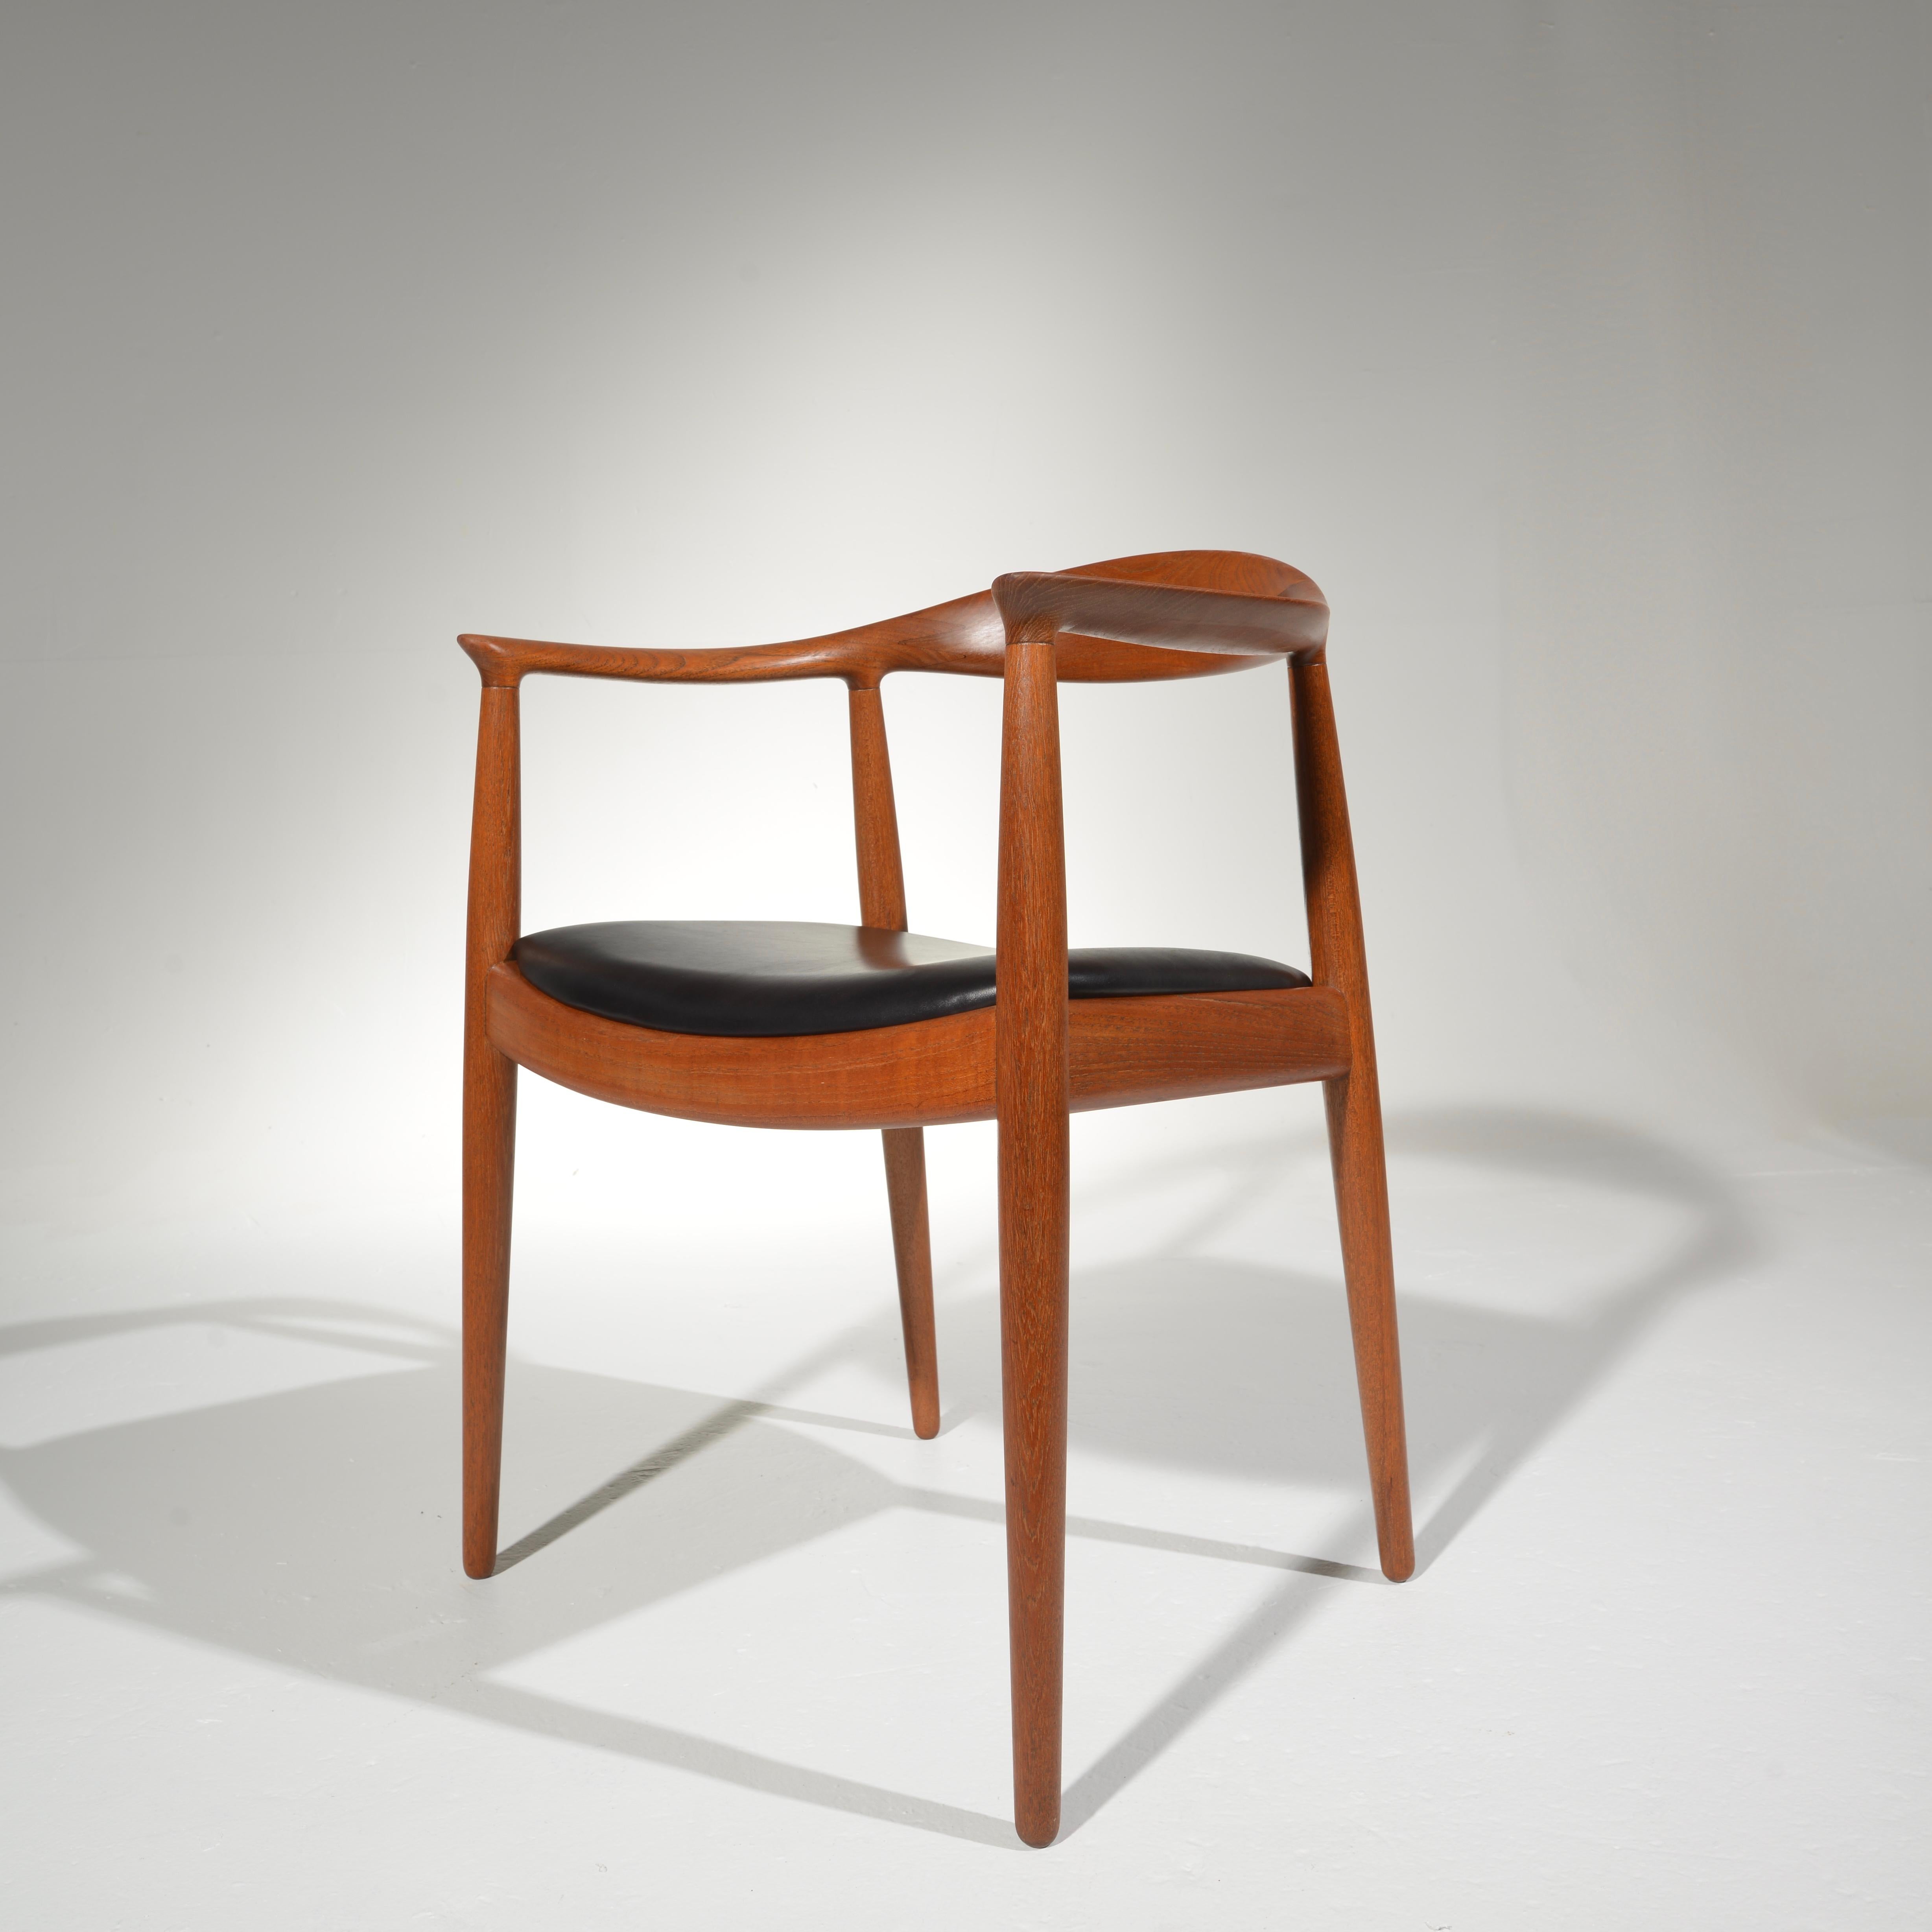 5 Hans Wegner for Johannes Hansen JH-503 Chairs in Teak and Leather For Sale 1